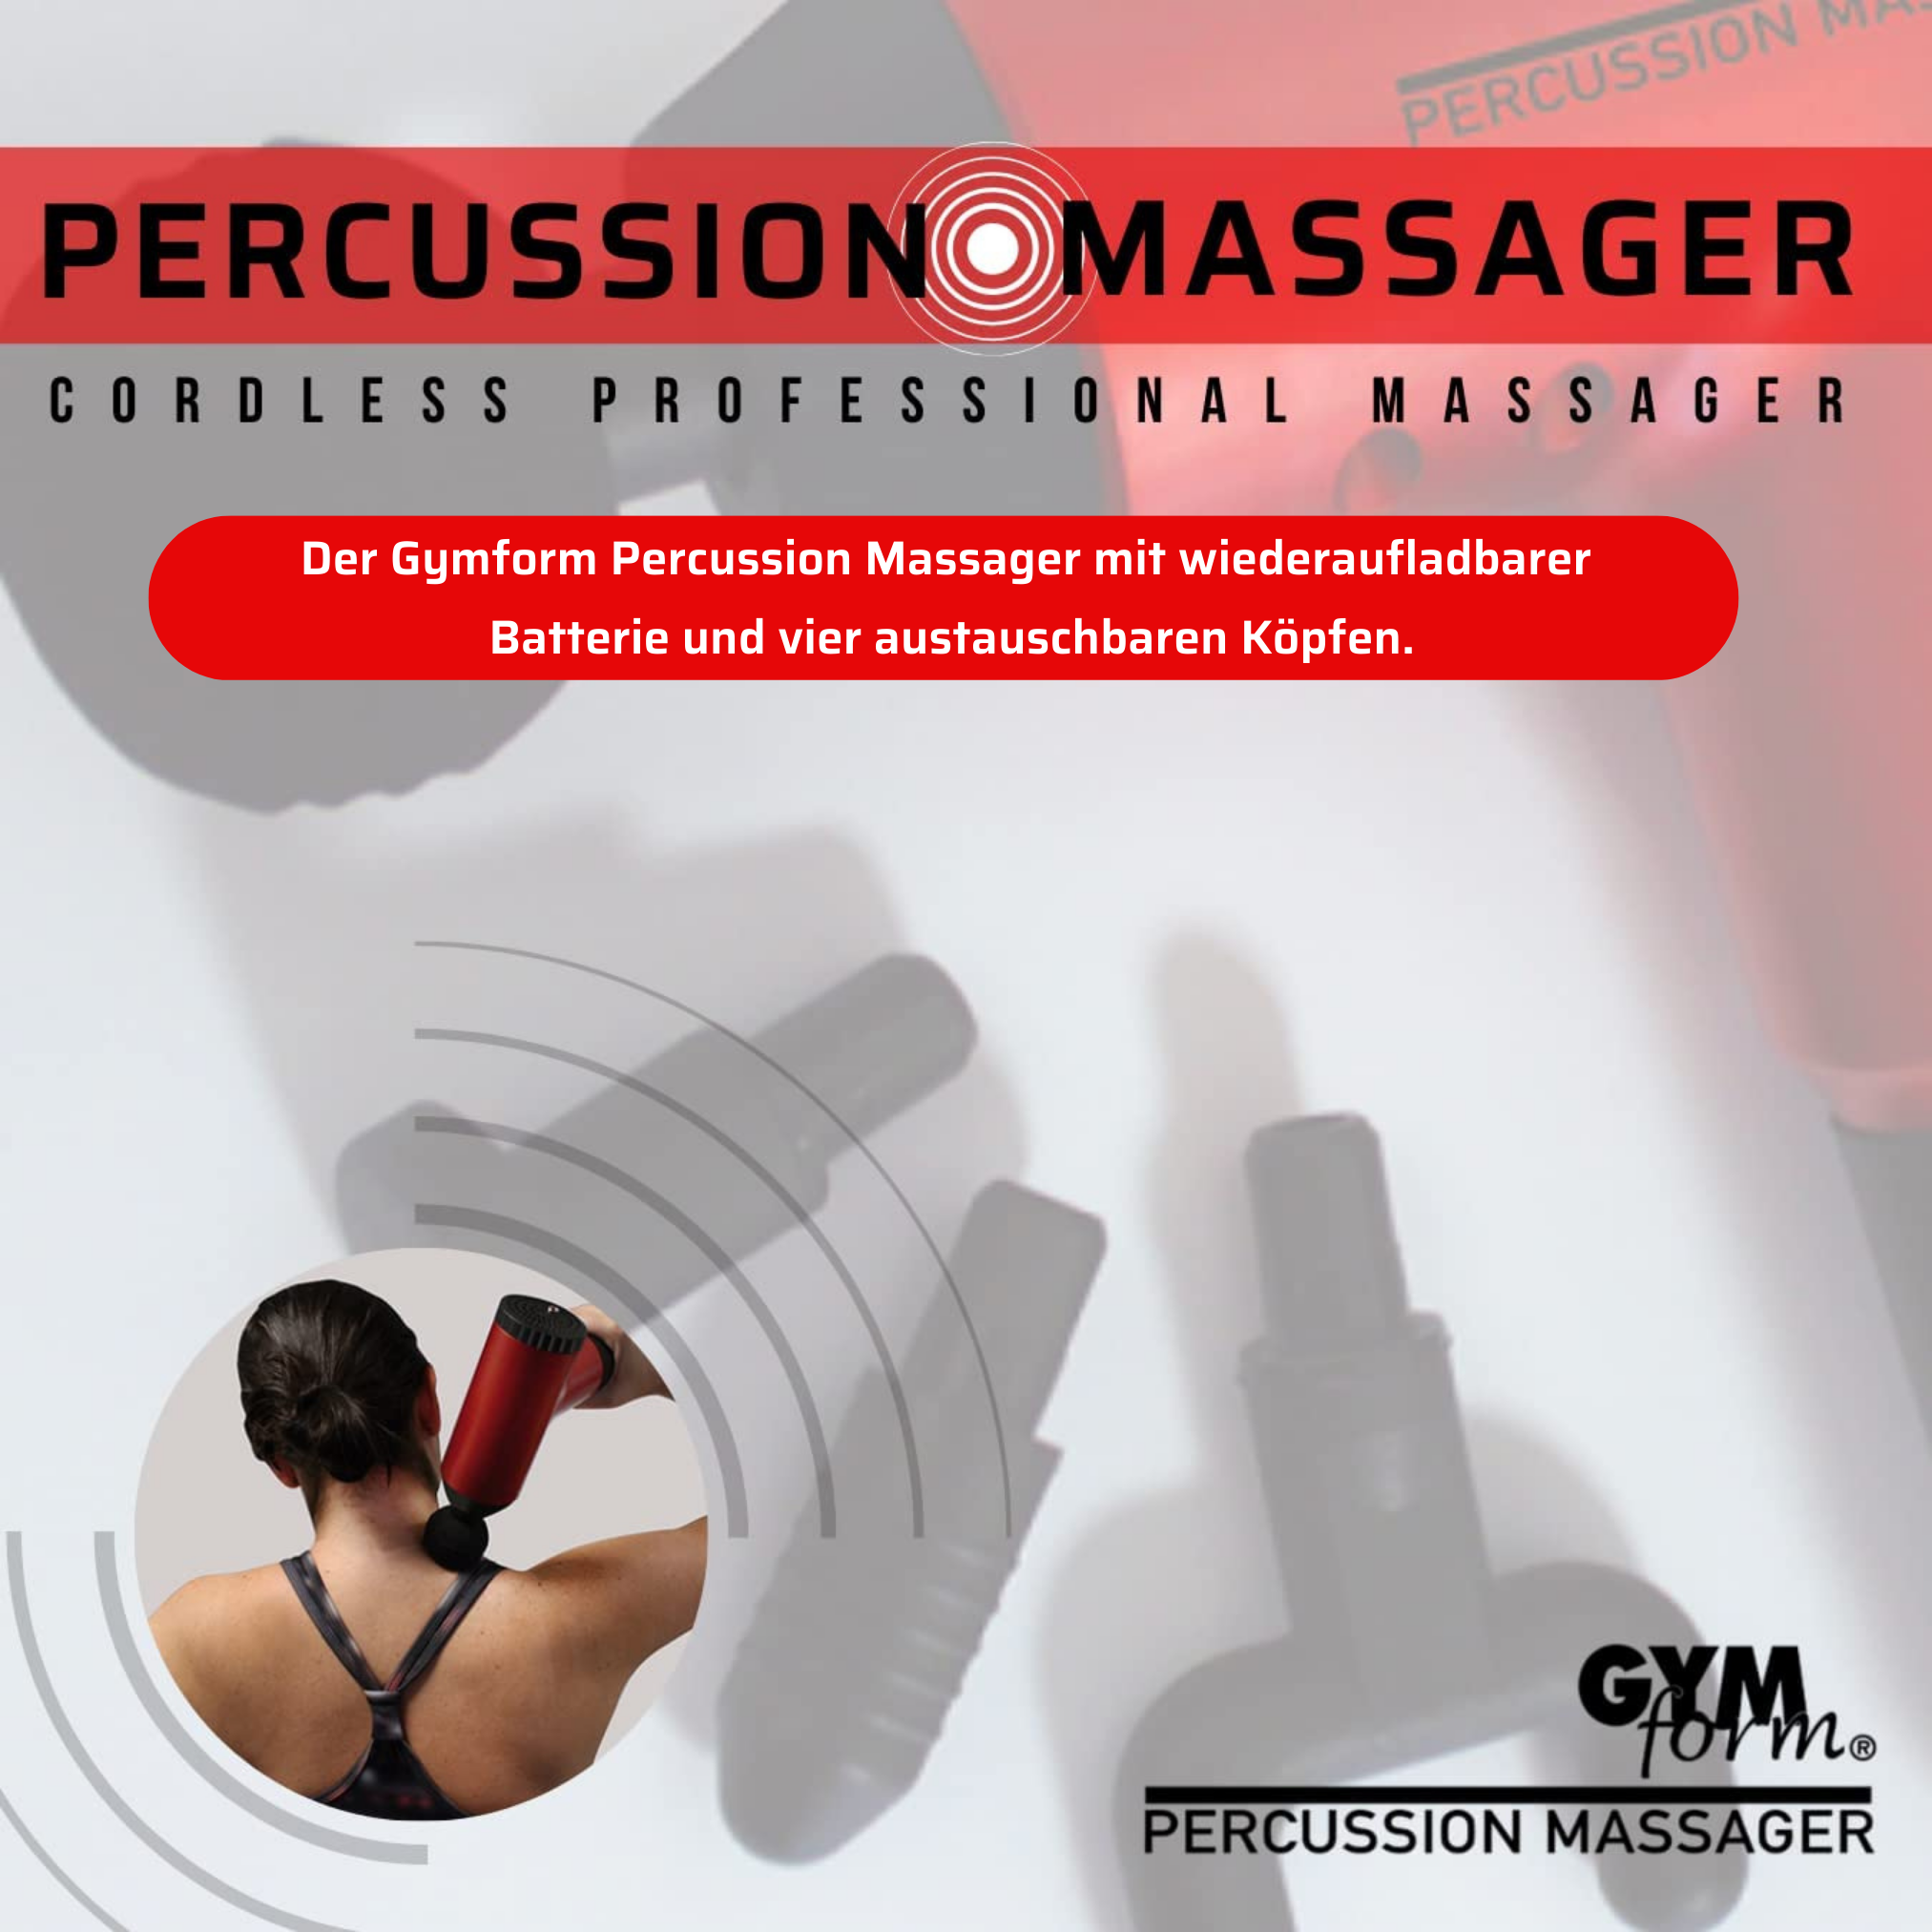 GYMFORM Percussion Massager Cushion Massage Massagepistole